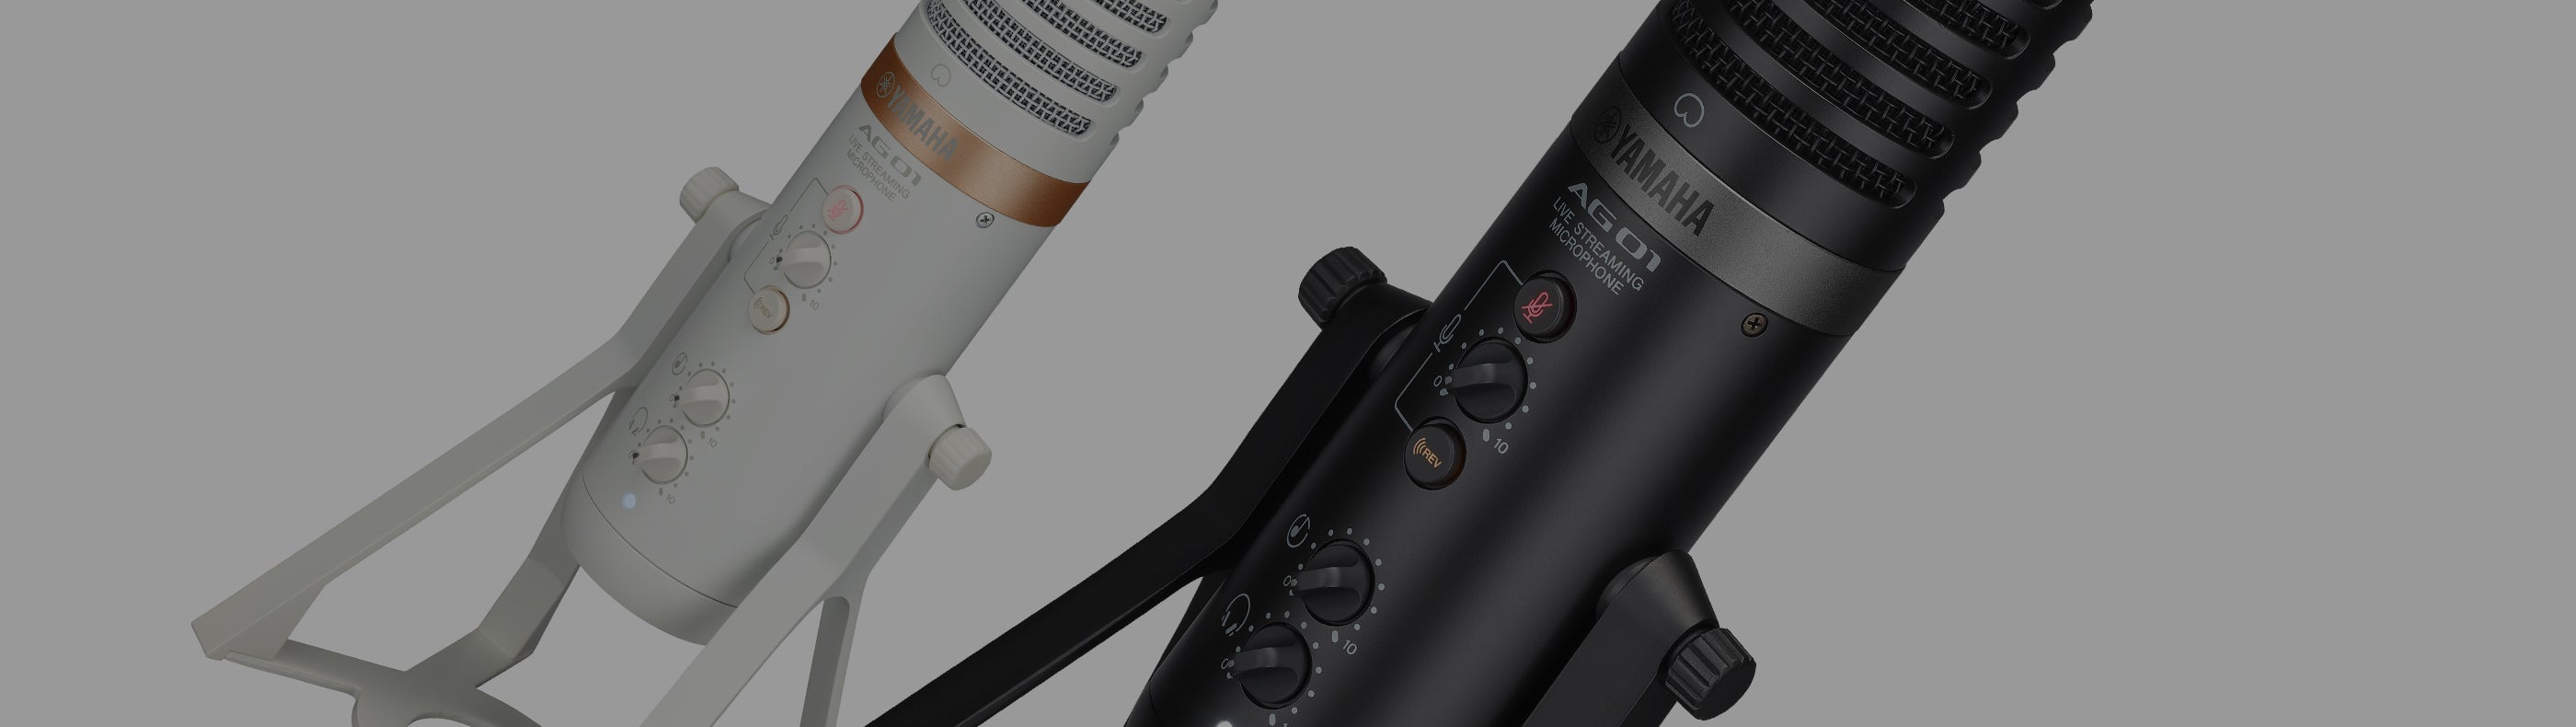 Yamaha AG01 Live Streaming USB Microphone - Save w/ Bundles! – Kraft Music